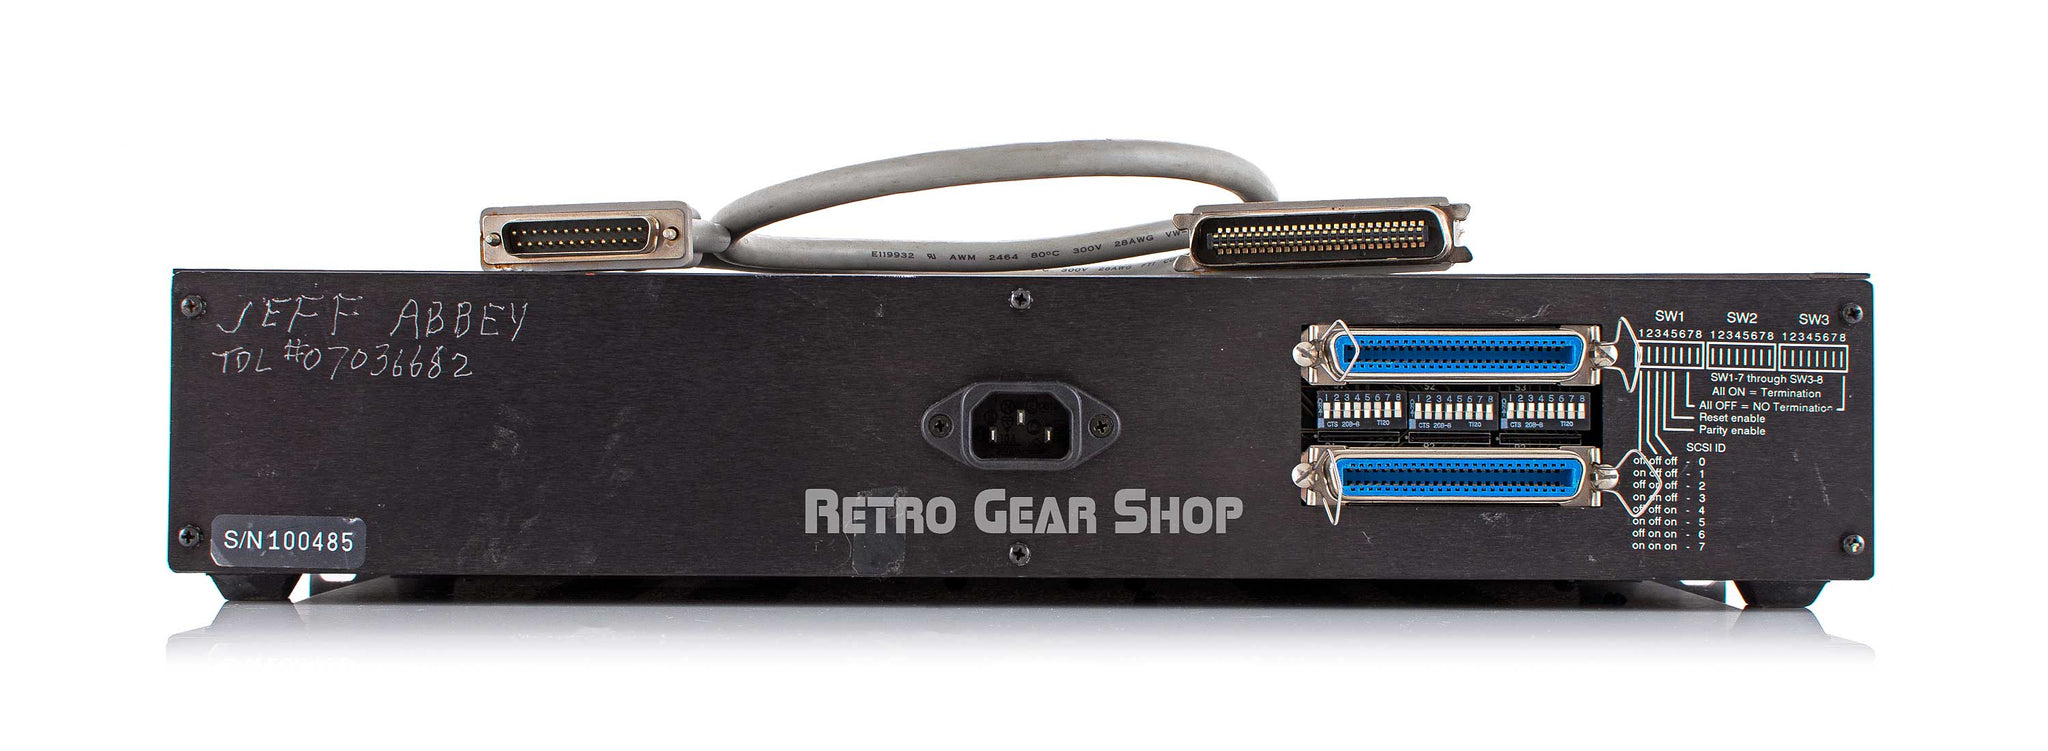 PS Systems 2U SCSI Rack 44MB Tape Drive Vintage Rare – Retro Gear Shop